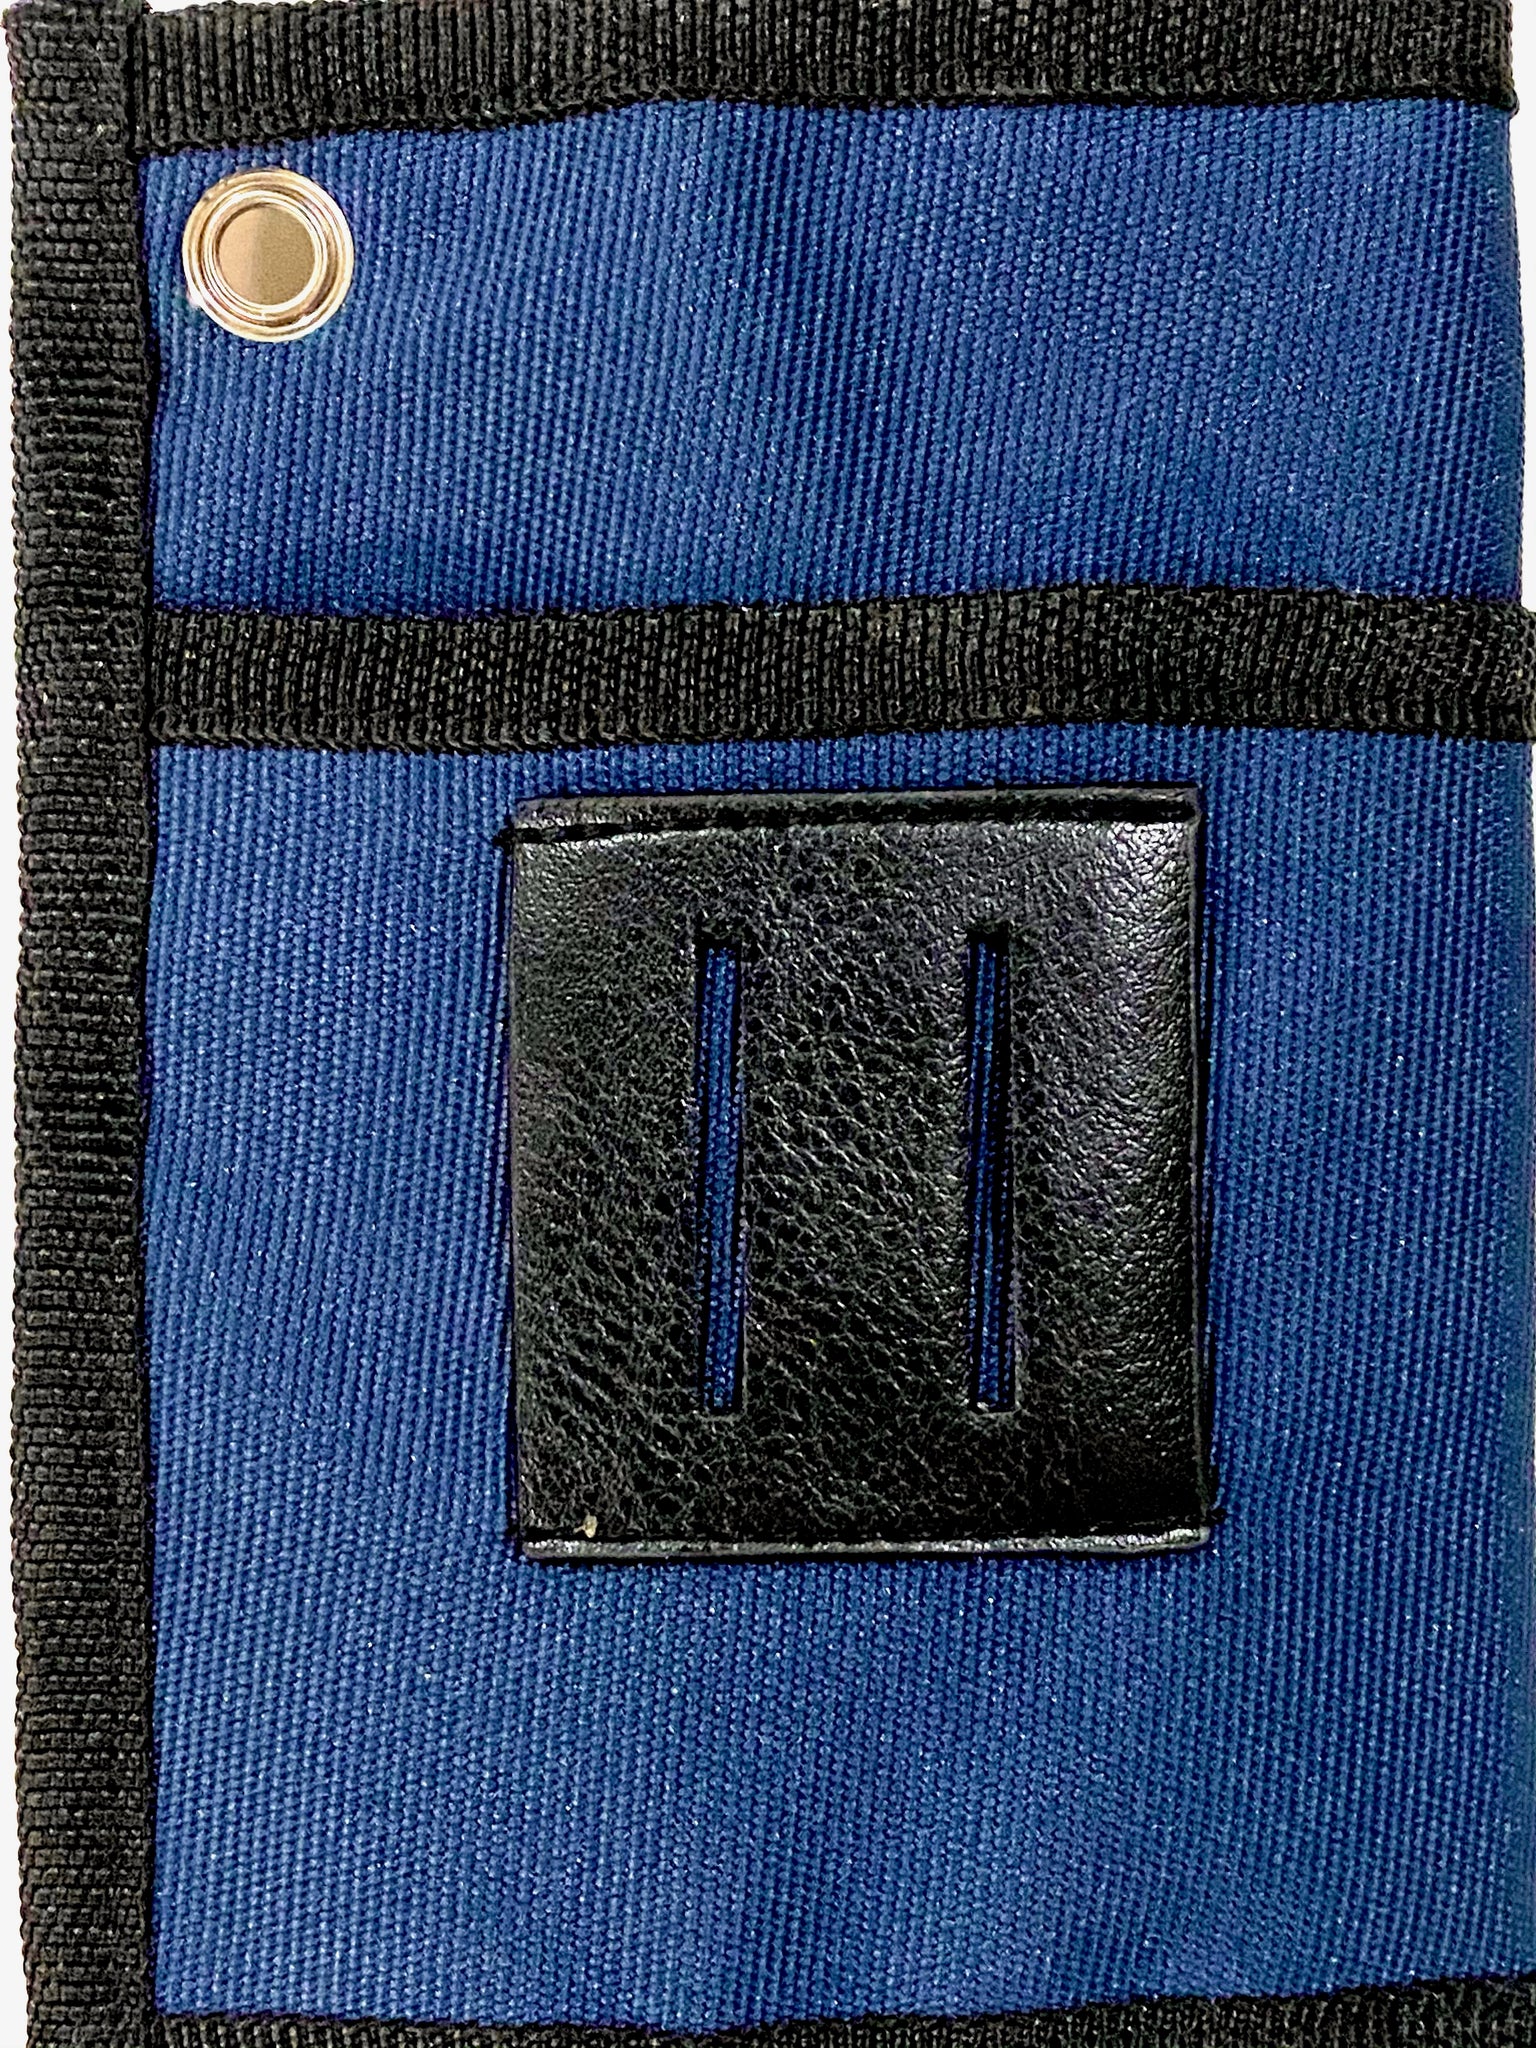 Portafoglio per notebook EVENTYR II EDC, custodia Plein Air